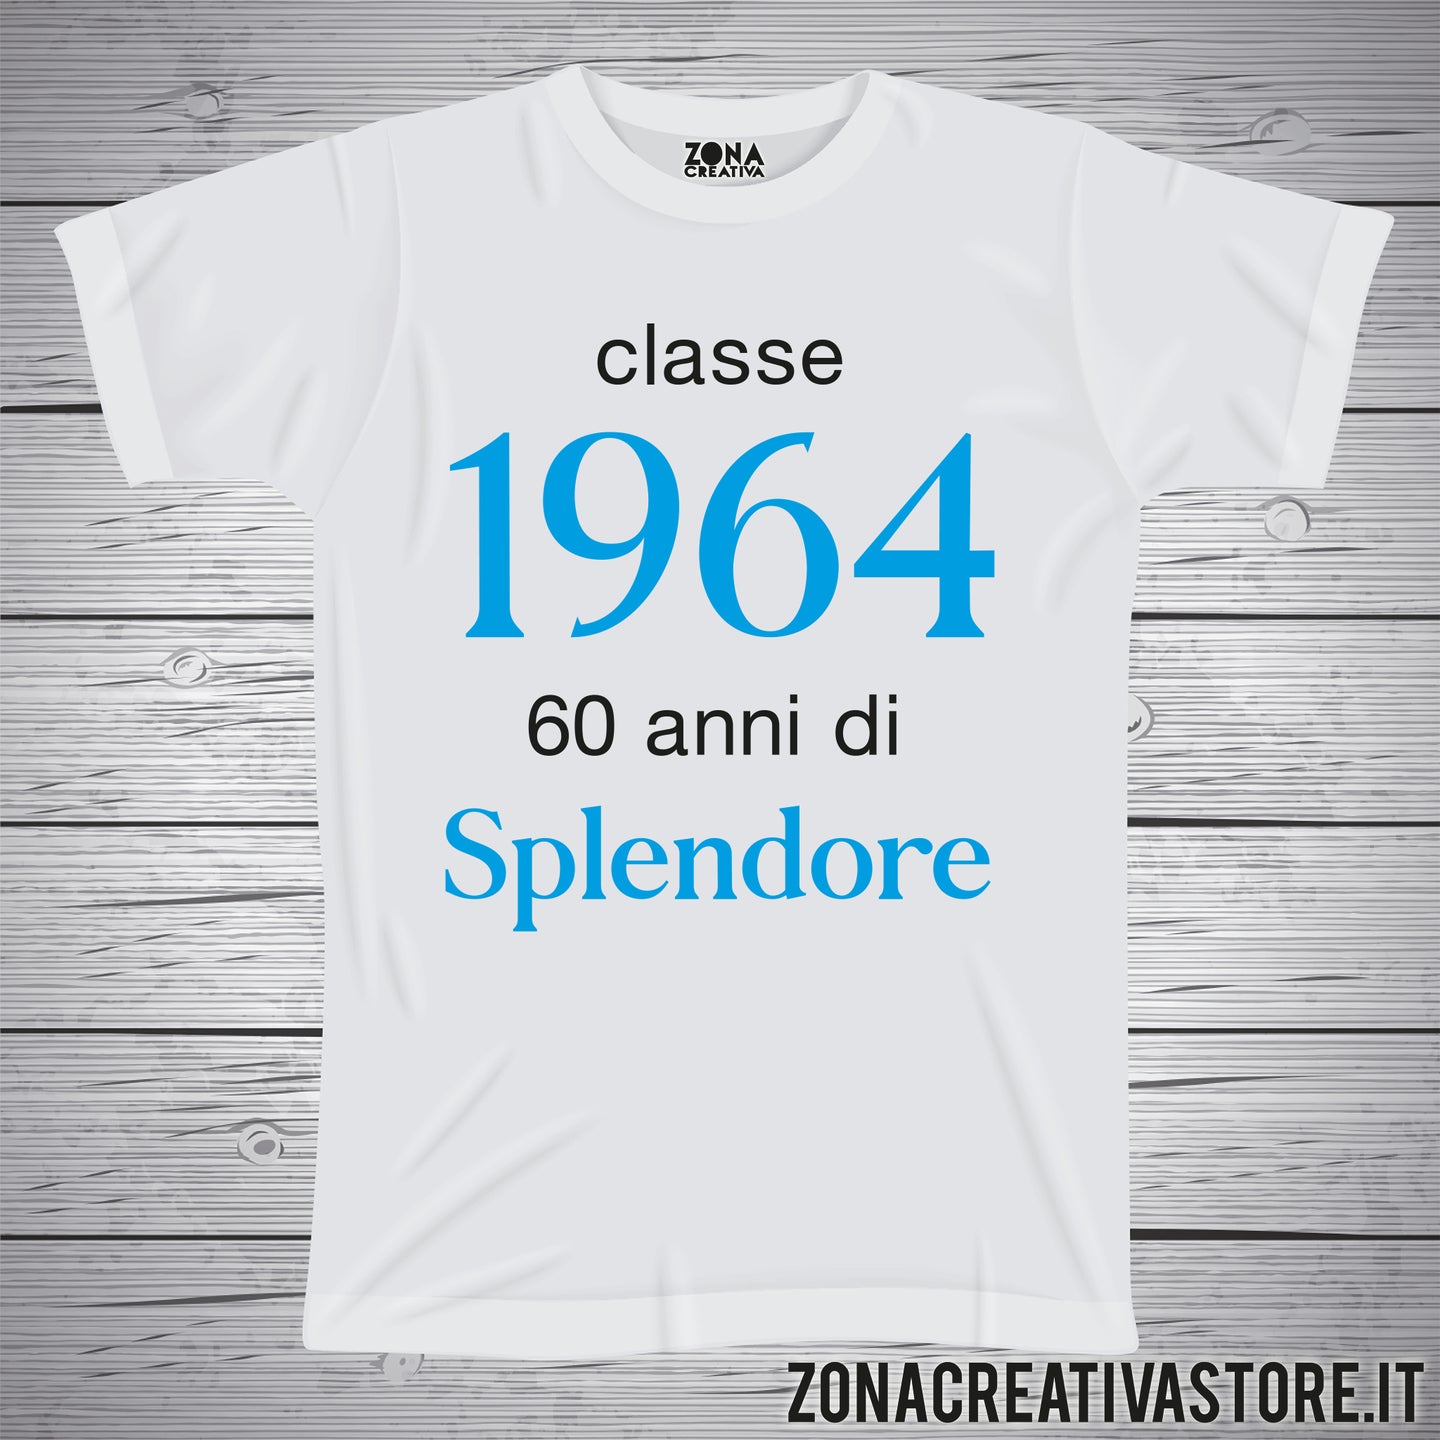 T-shirt per festa di compleanno CLASSE 1964